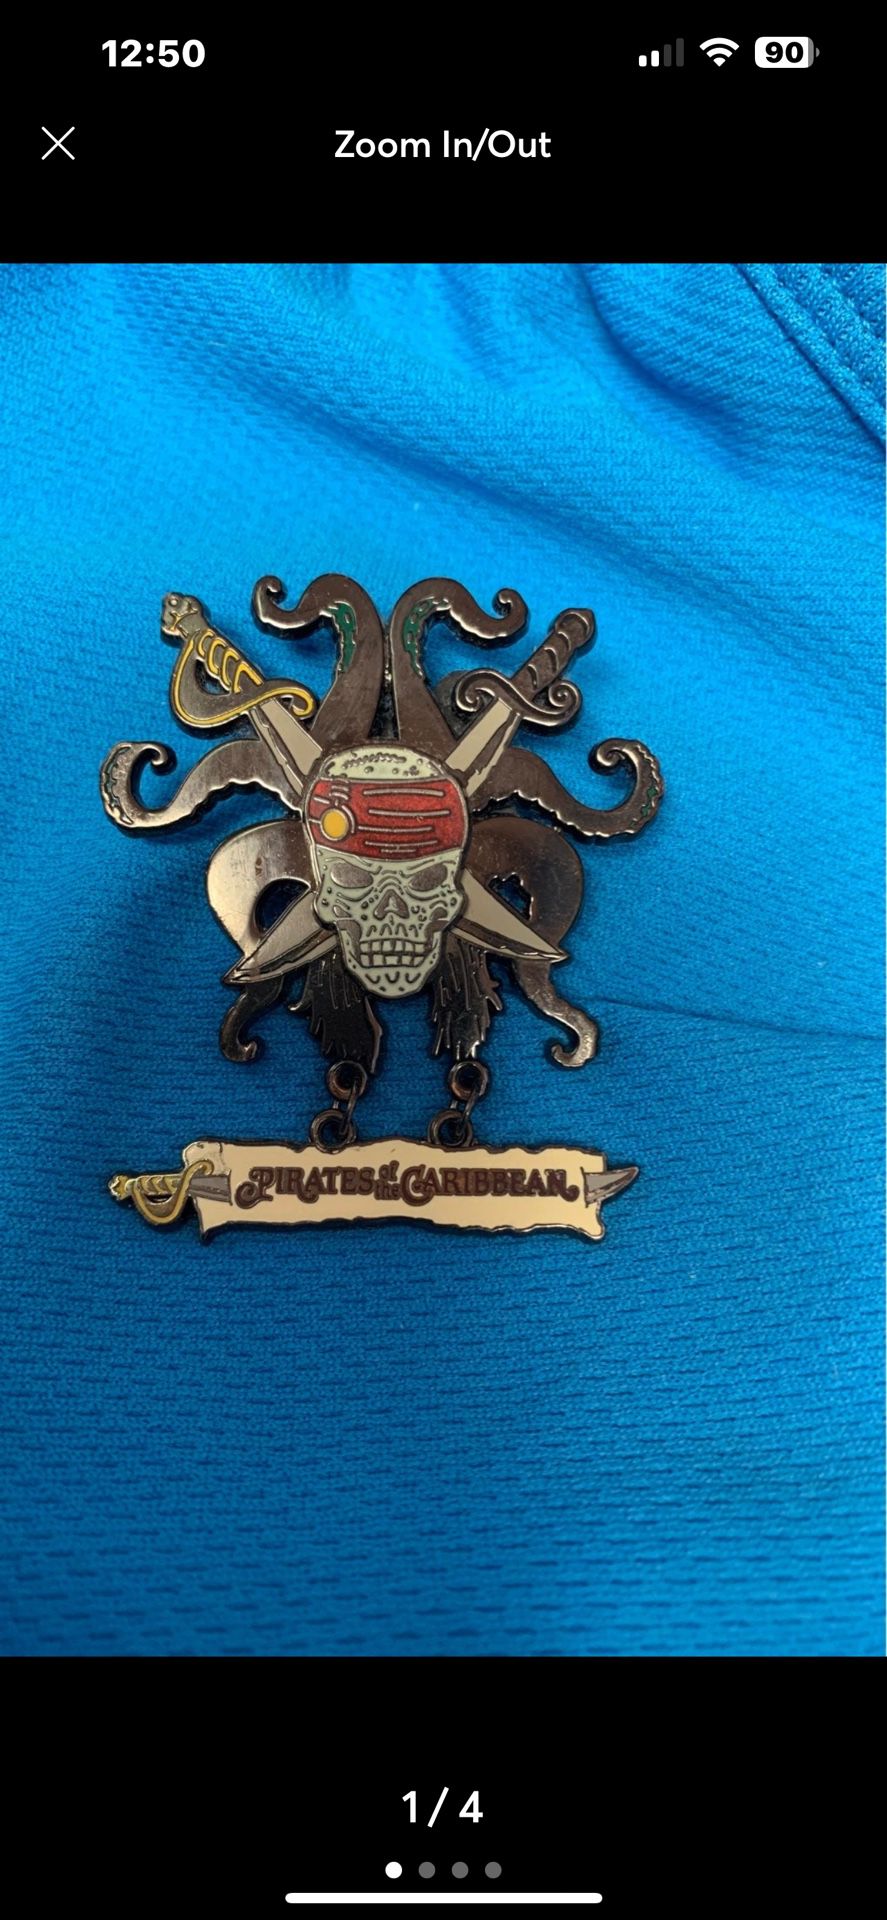 Pirates of the Caribbean Cross Bones Disney Pin